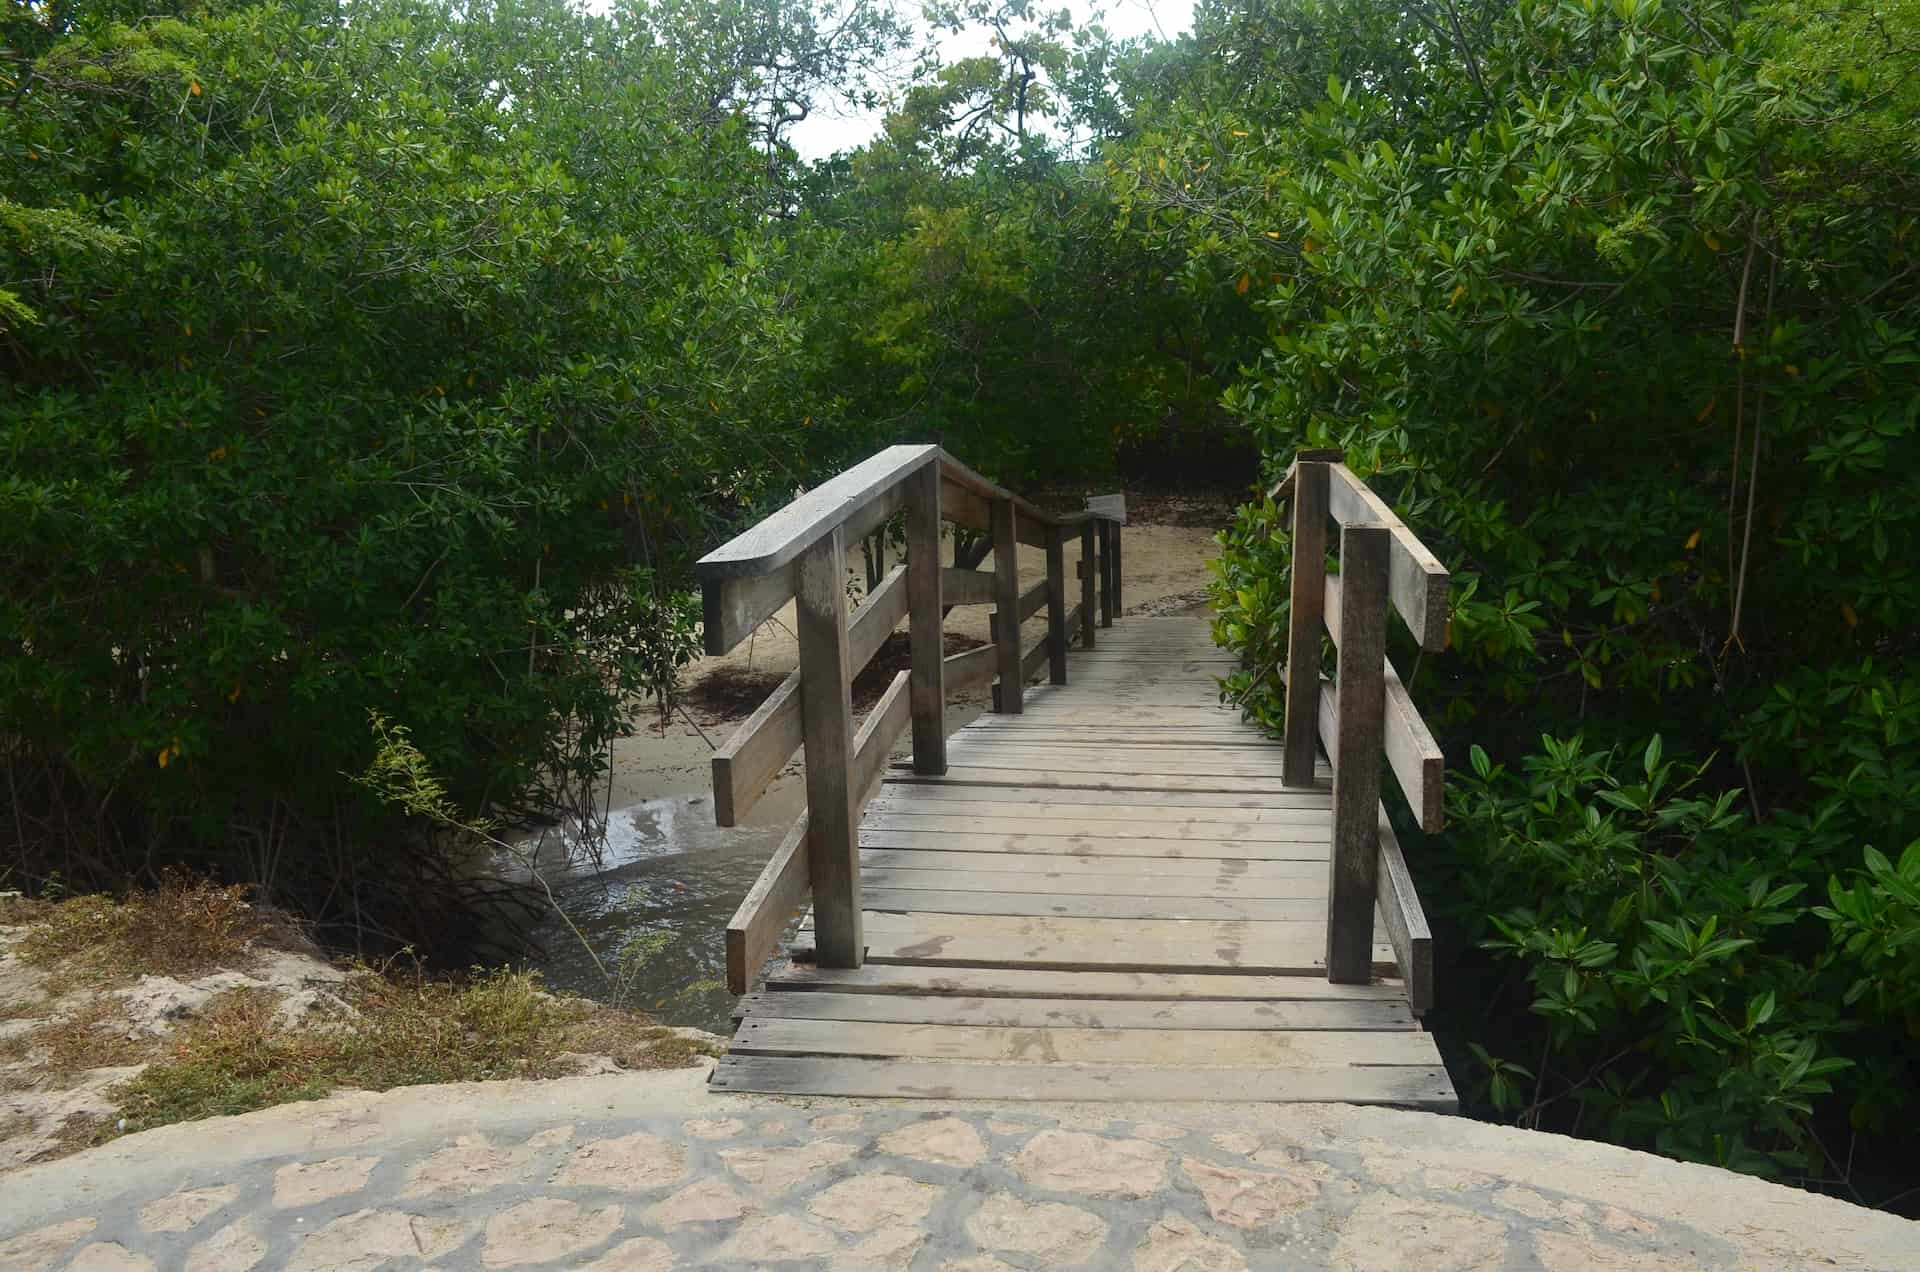 Path through the mangroves at Mangel Halto